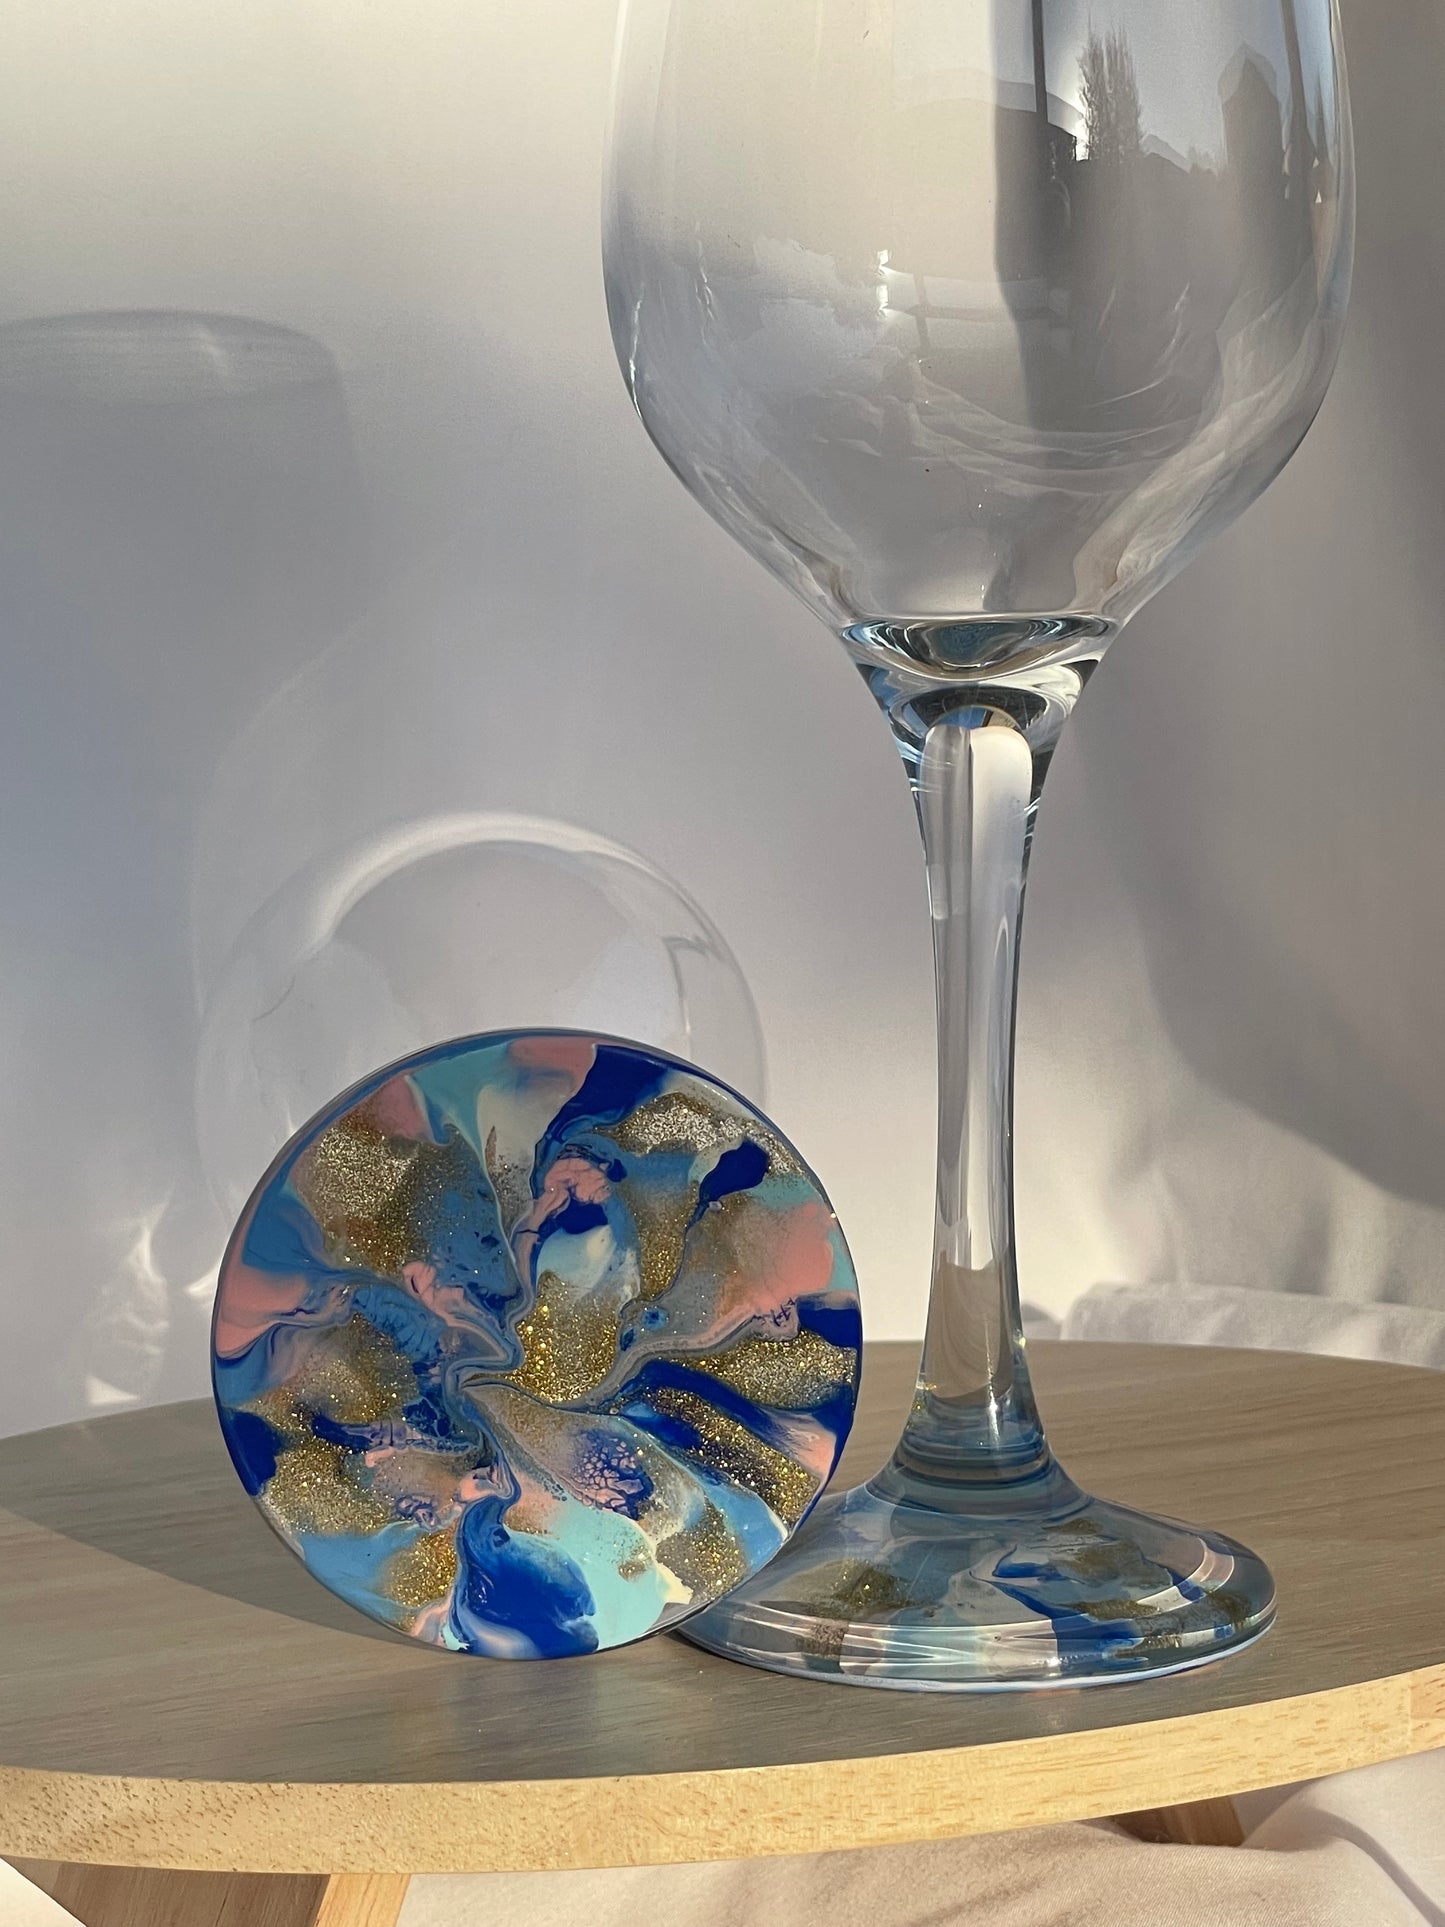 Colored Wine Glass Set